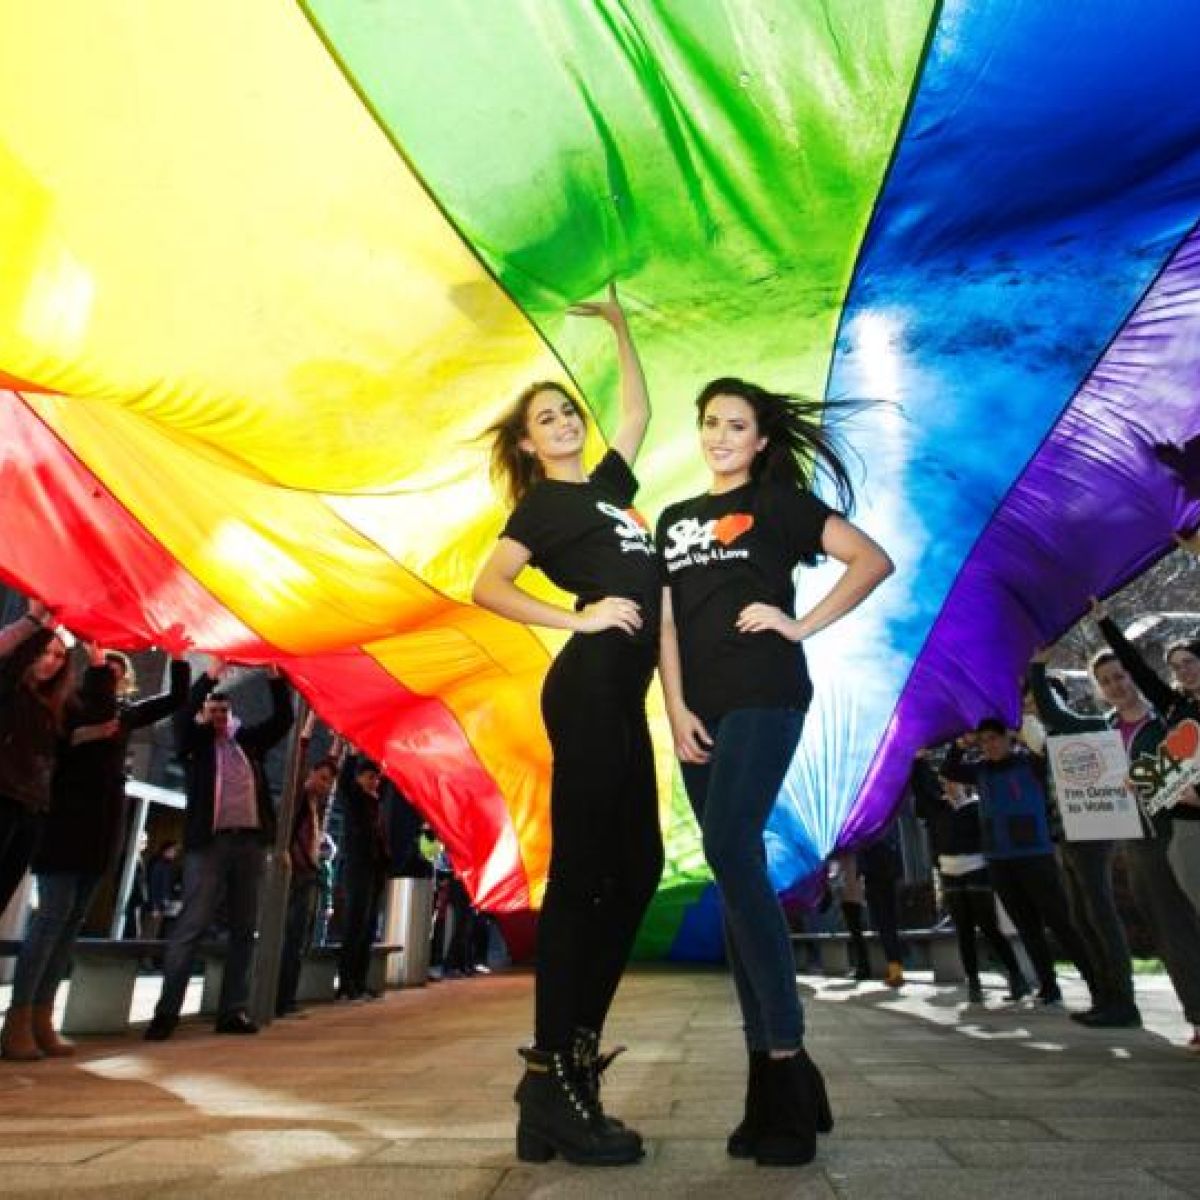 2020 Lesbian Chat Site in Ireland - uselesspenguin.co.uk